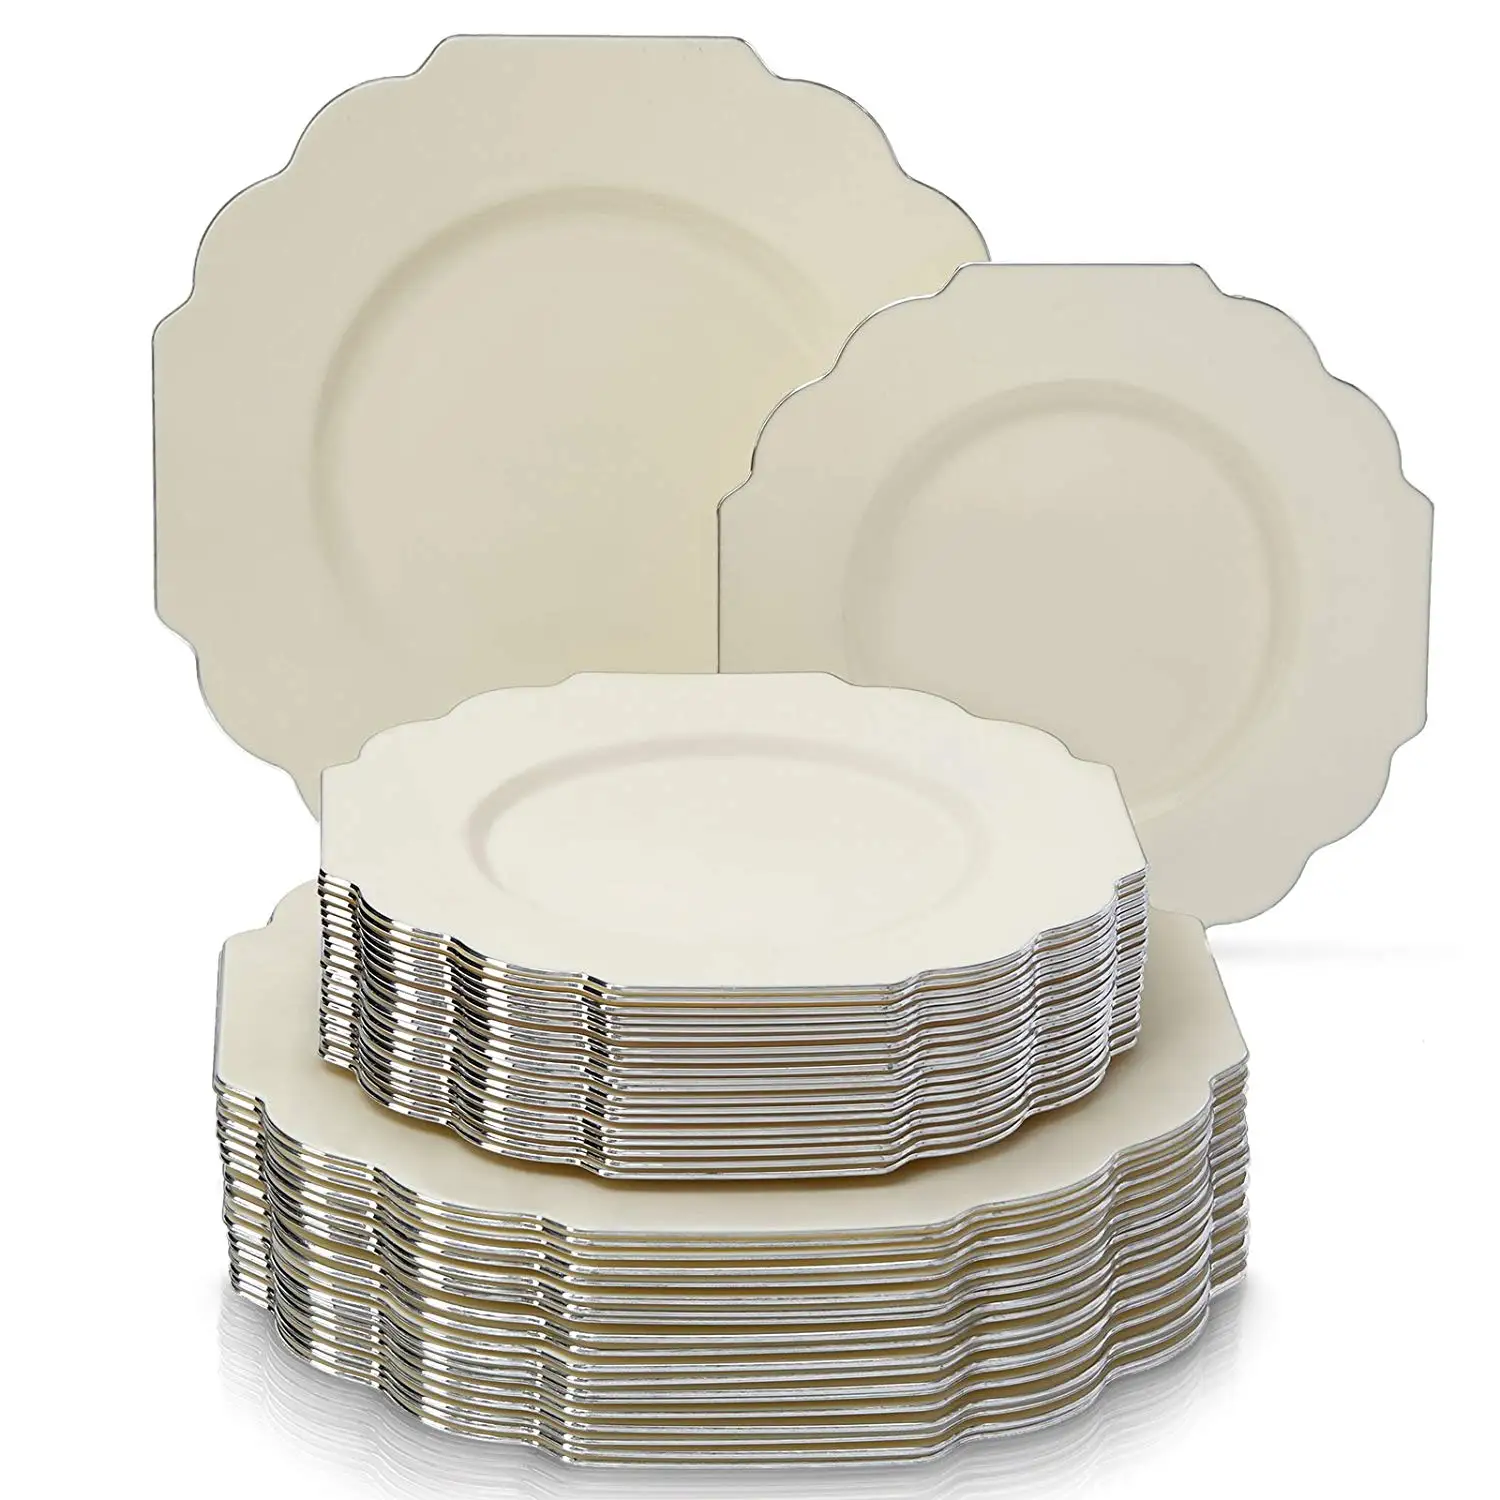 Cheap Disposable Wedding Dinnerware Find Disposable Wedding